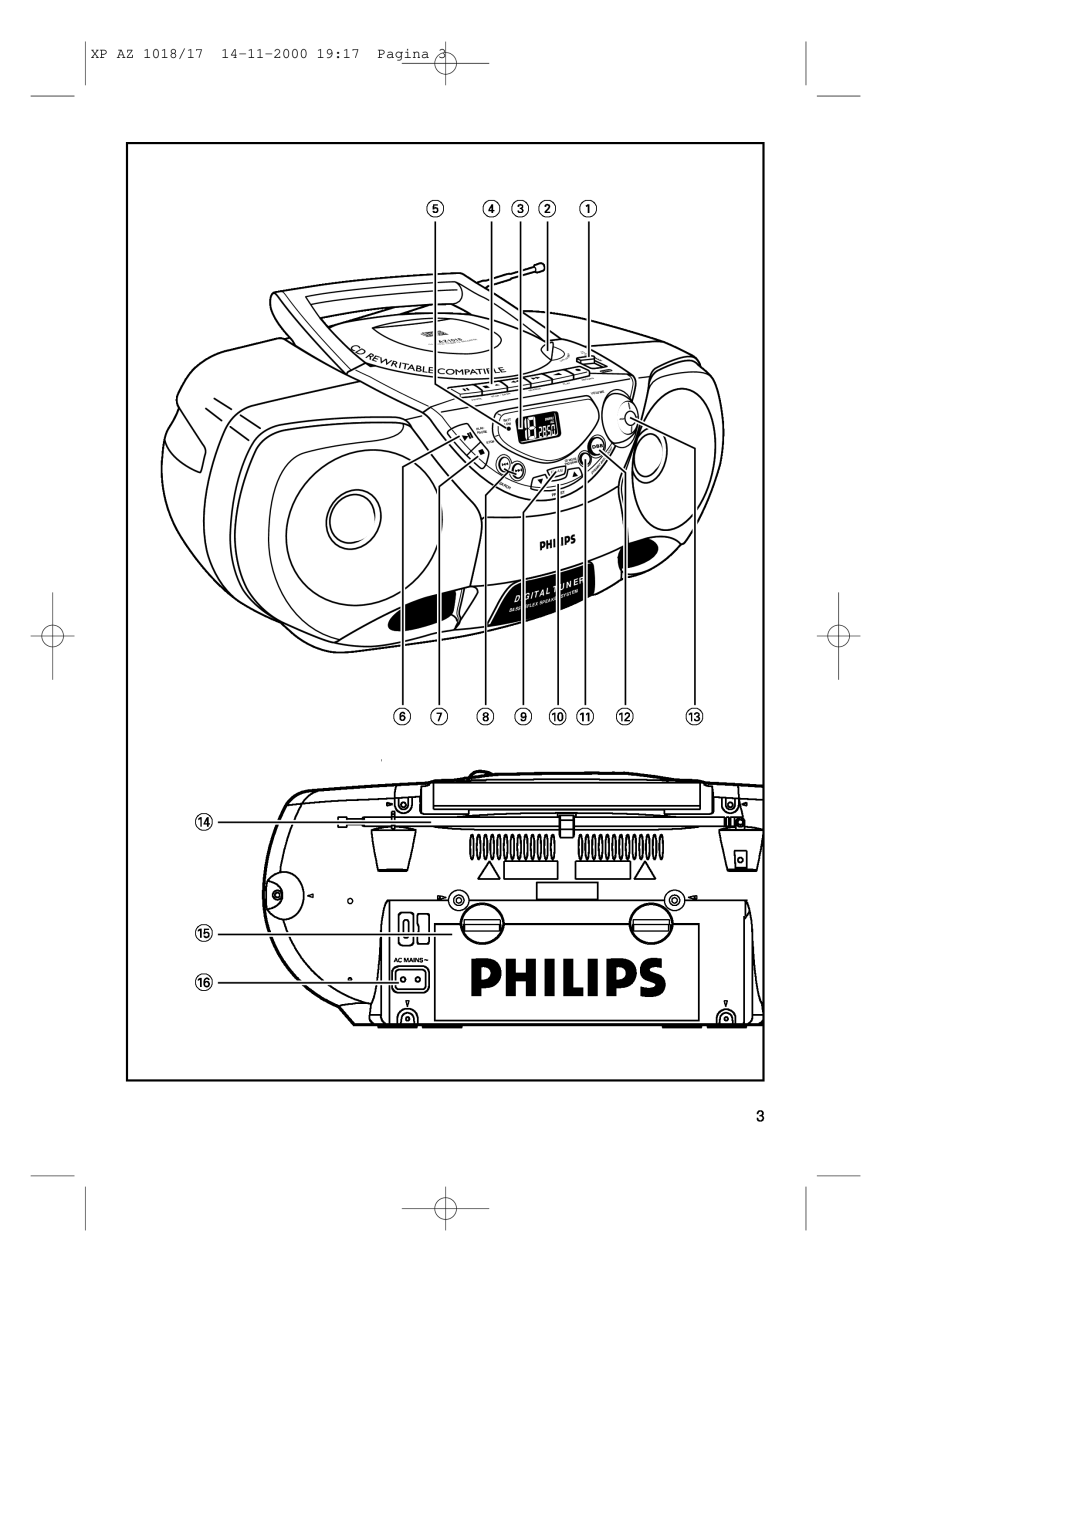 Philips manual Pagina, XP AZ 1018/17, 14-11-2000, Digi, Aker, Bass 